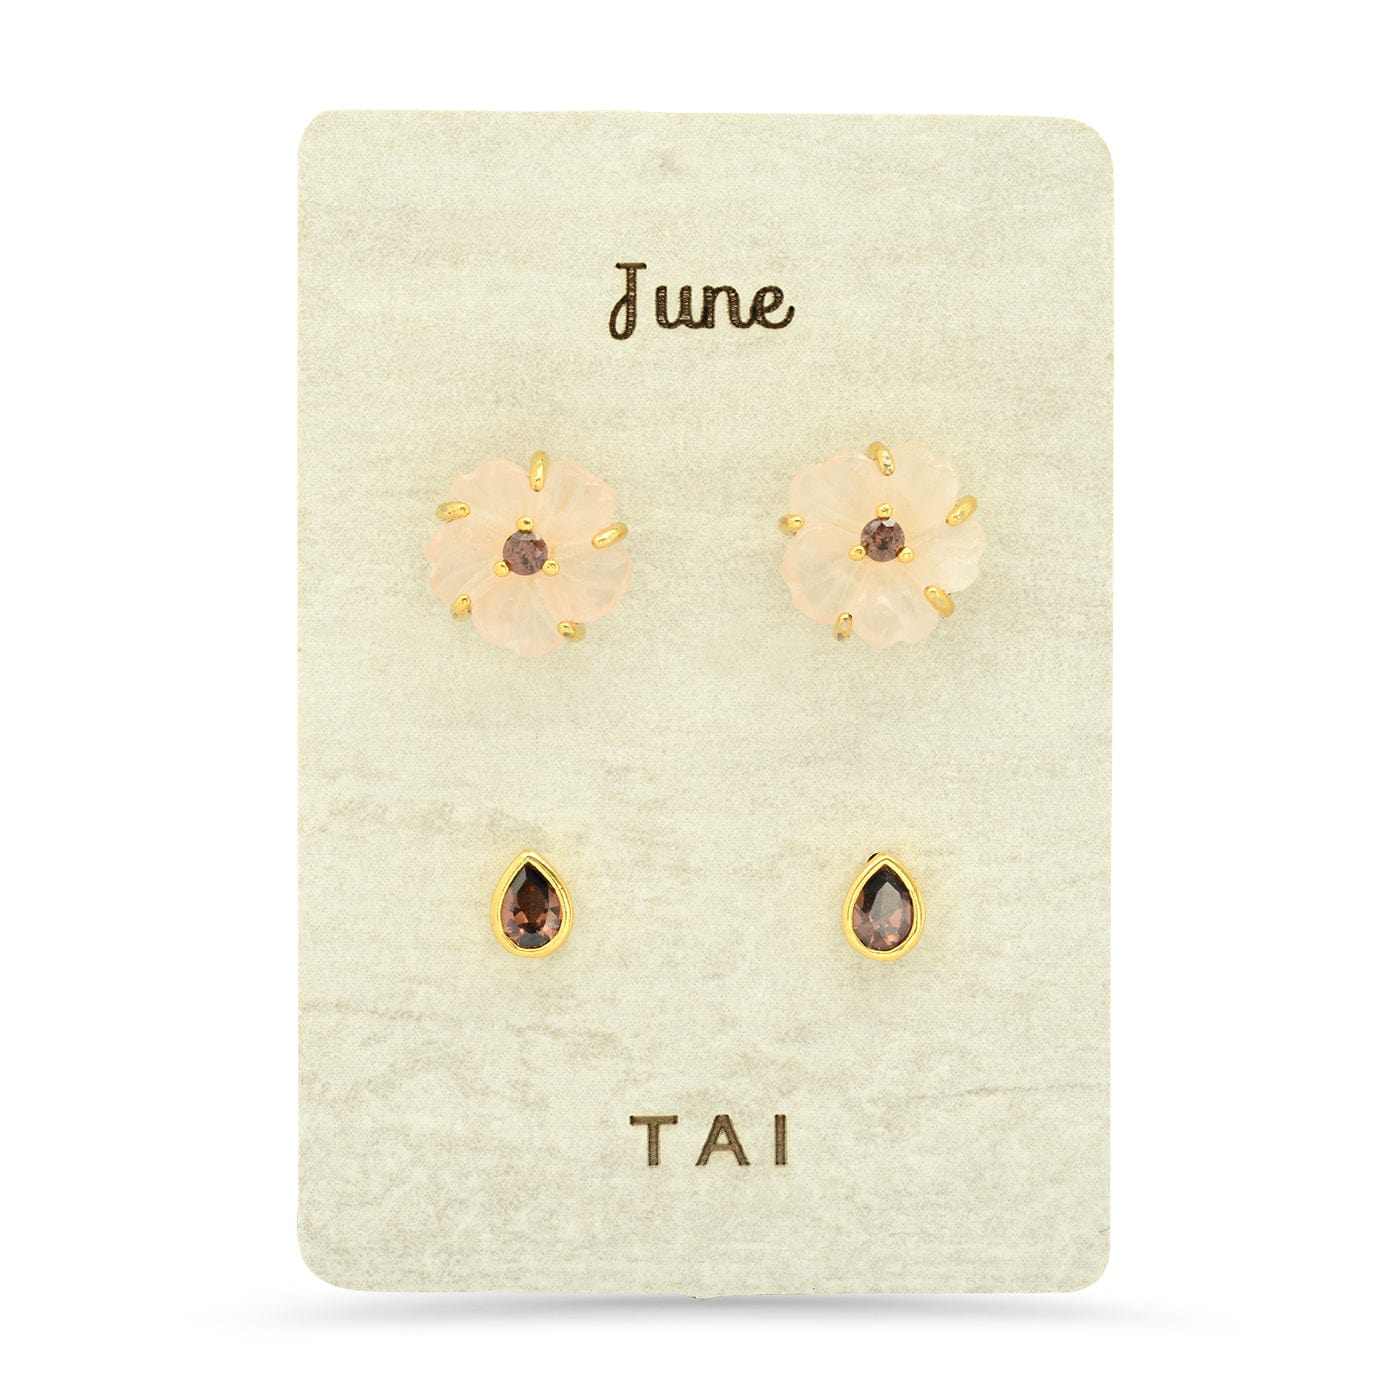 TAI JEWELRY Earrings June Rose Quartz Birthstone Earring Set